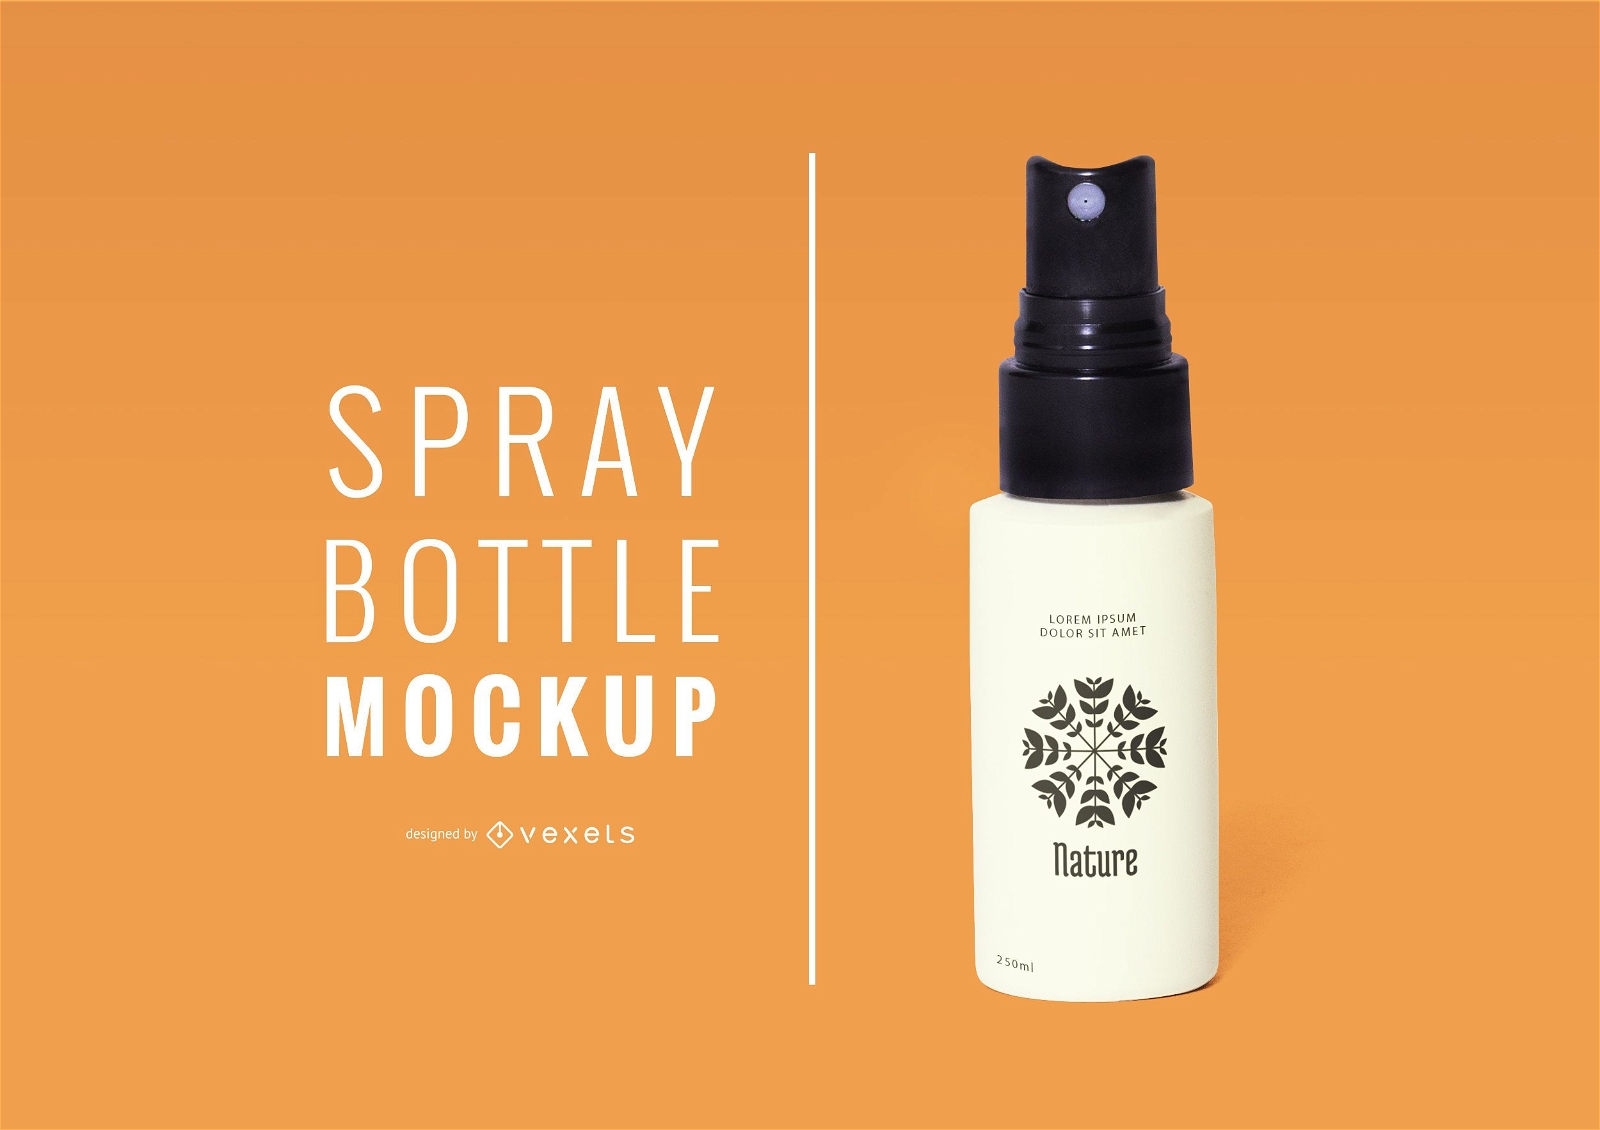 Spray bottle mockup design